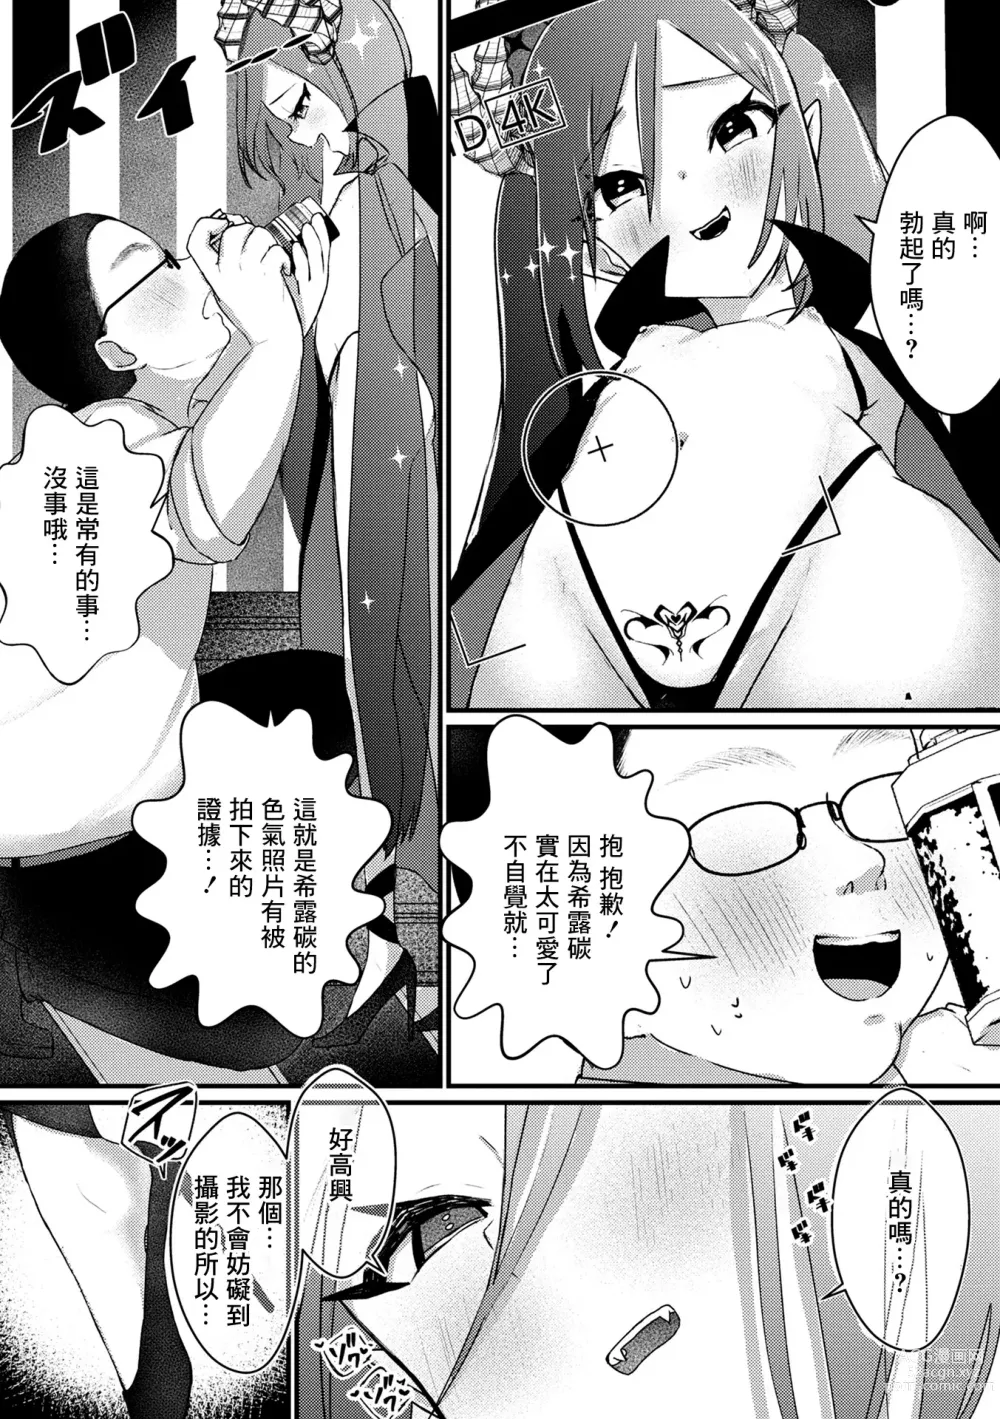 Page 7 of manga Dosukebe Otokonoko Cosplayer!